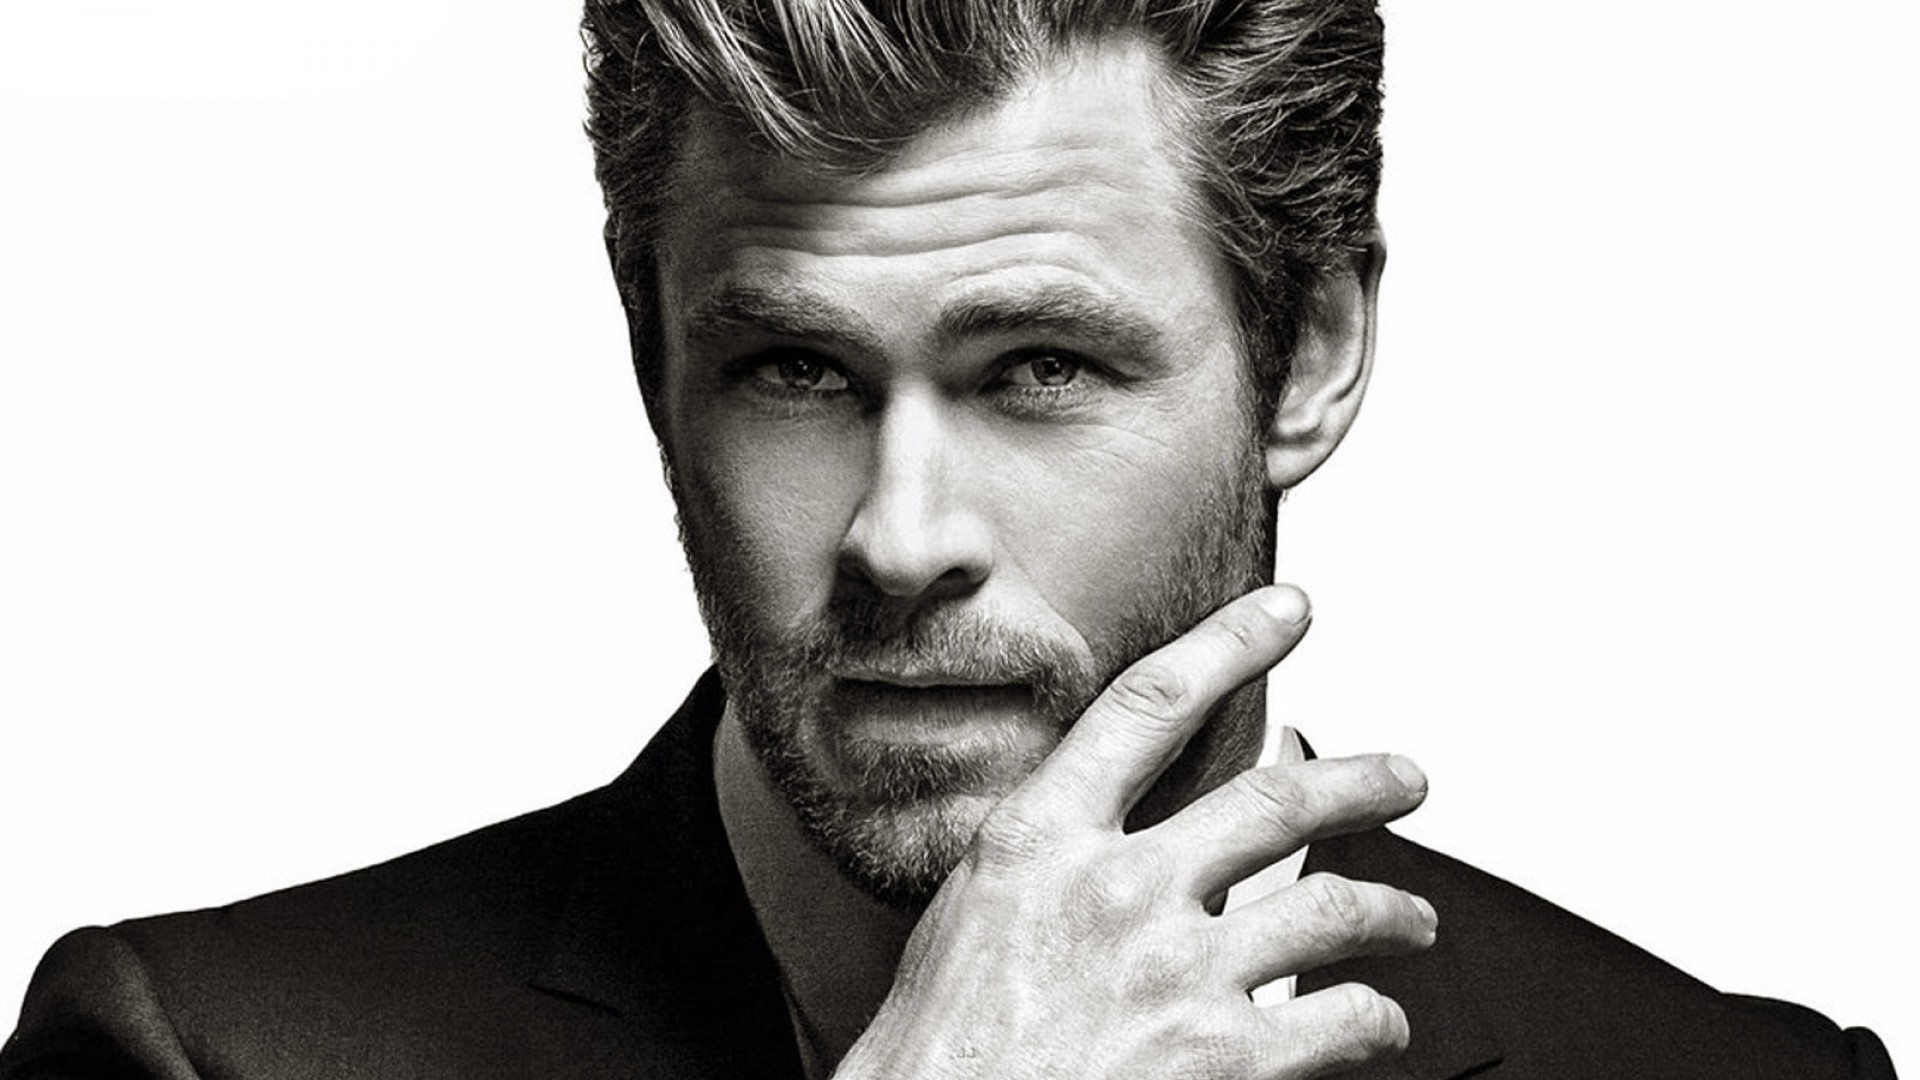 Chris Hemsworth Wallpaper High Resolution And Quality